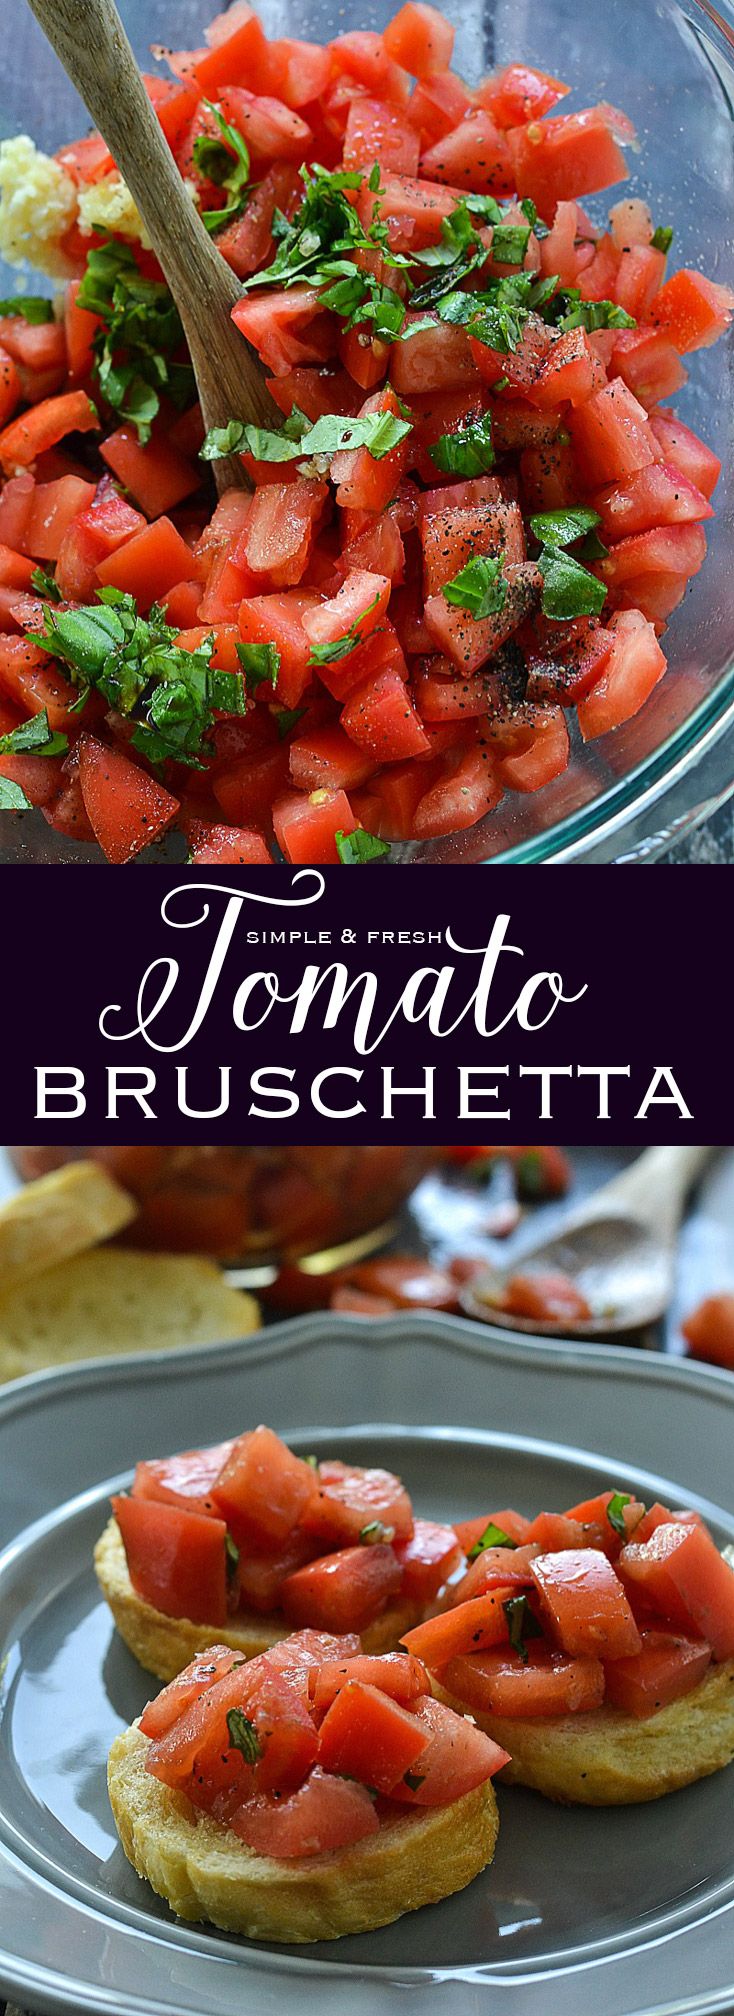 Simple and fresh Tomato Bruschetta | www.motherthyme.com